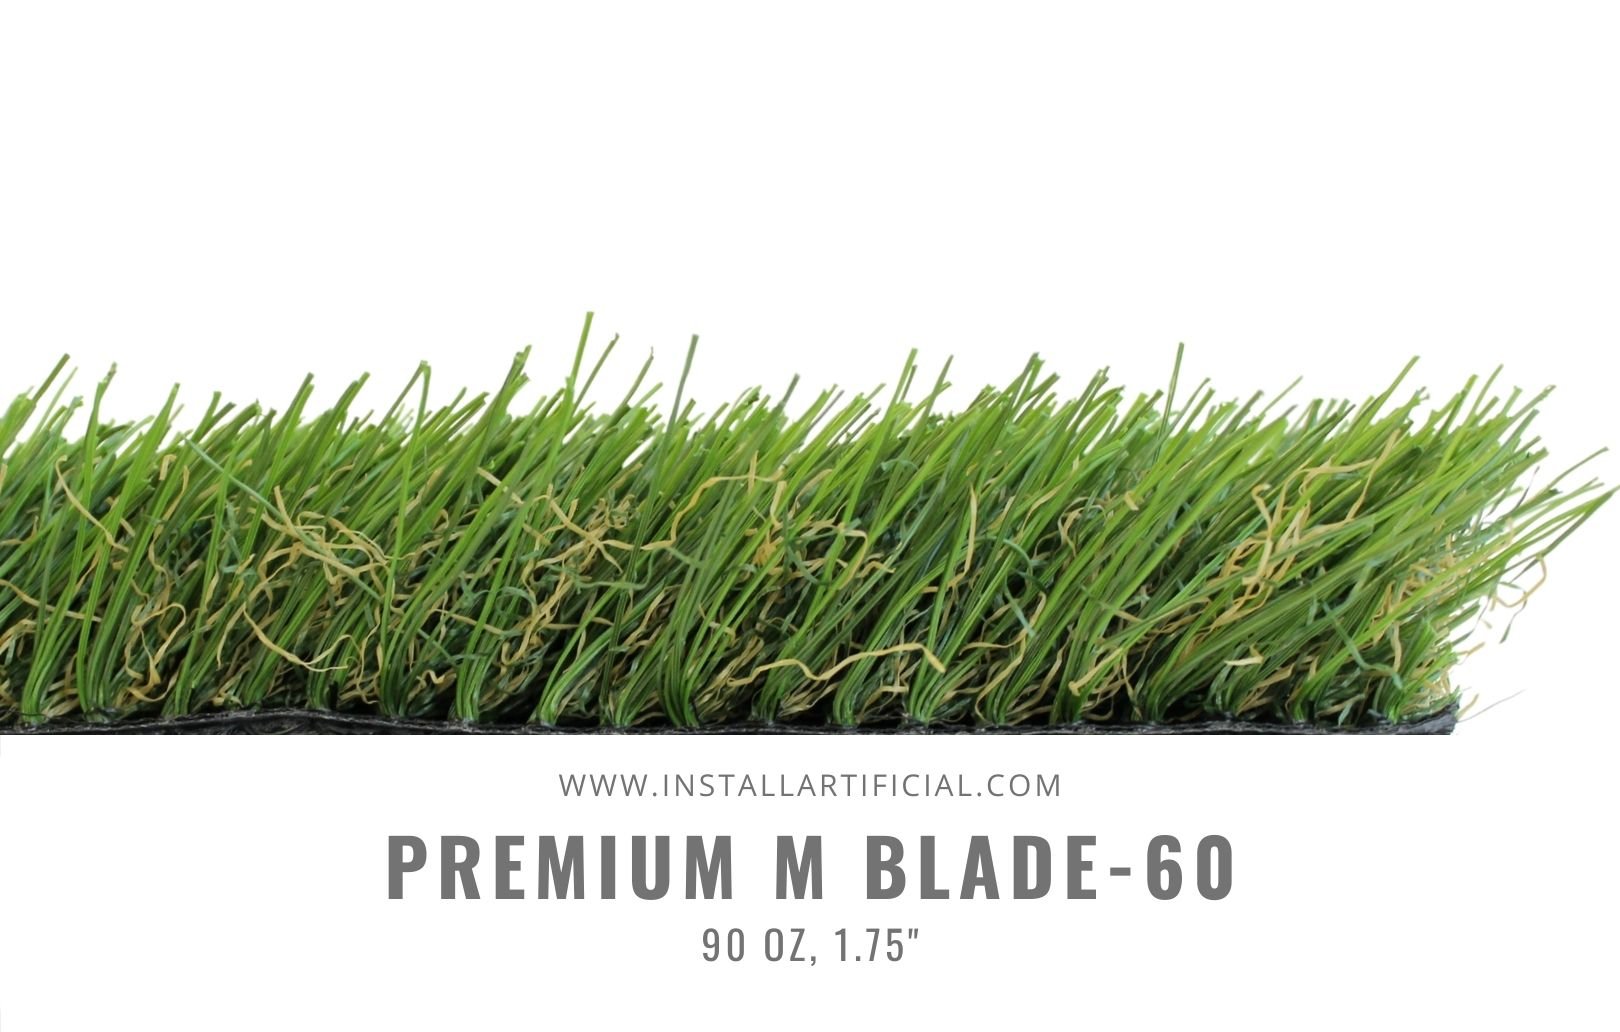 Premium M Blade-60, Global Syn Turf, side